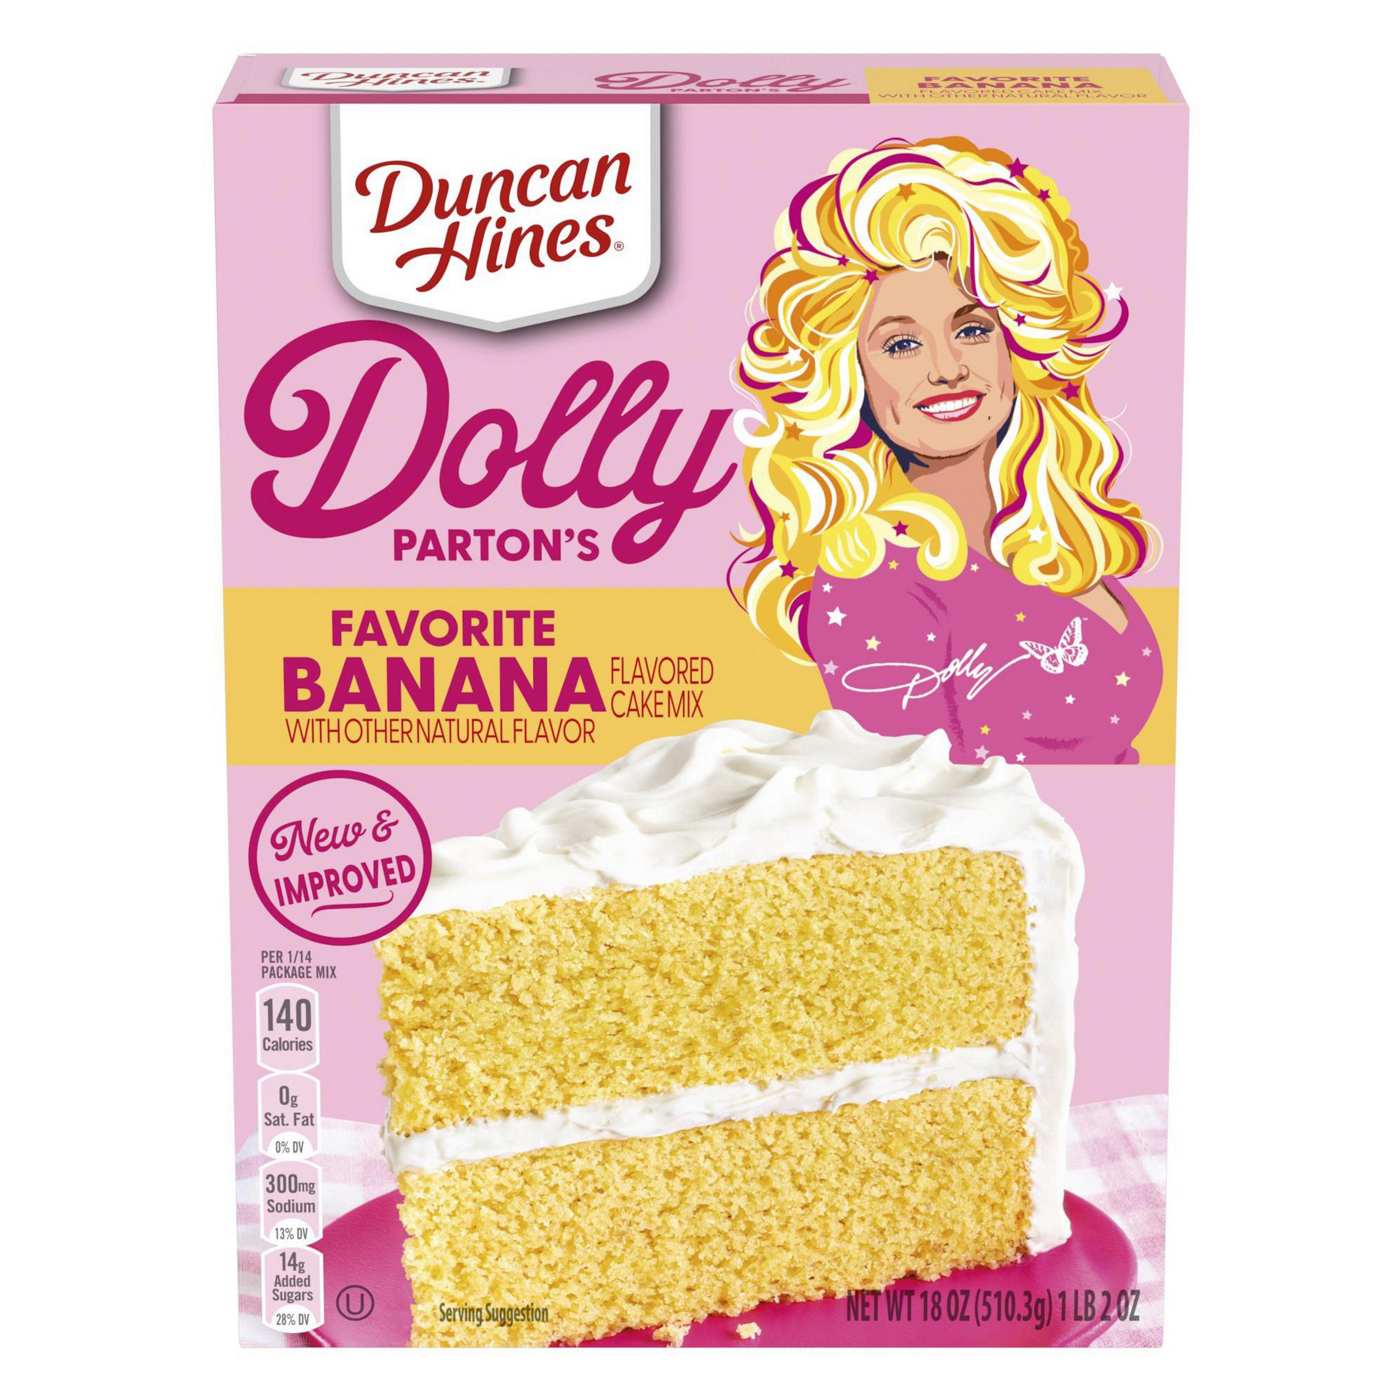 Duncan Hines Dolly Parton's Favorite Banana Cake Mix; image 1 of 4